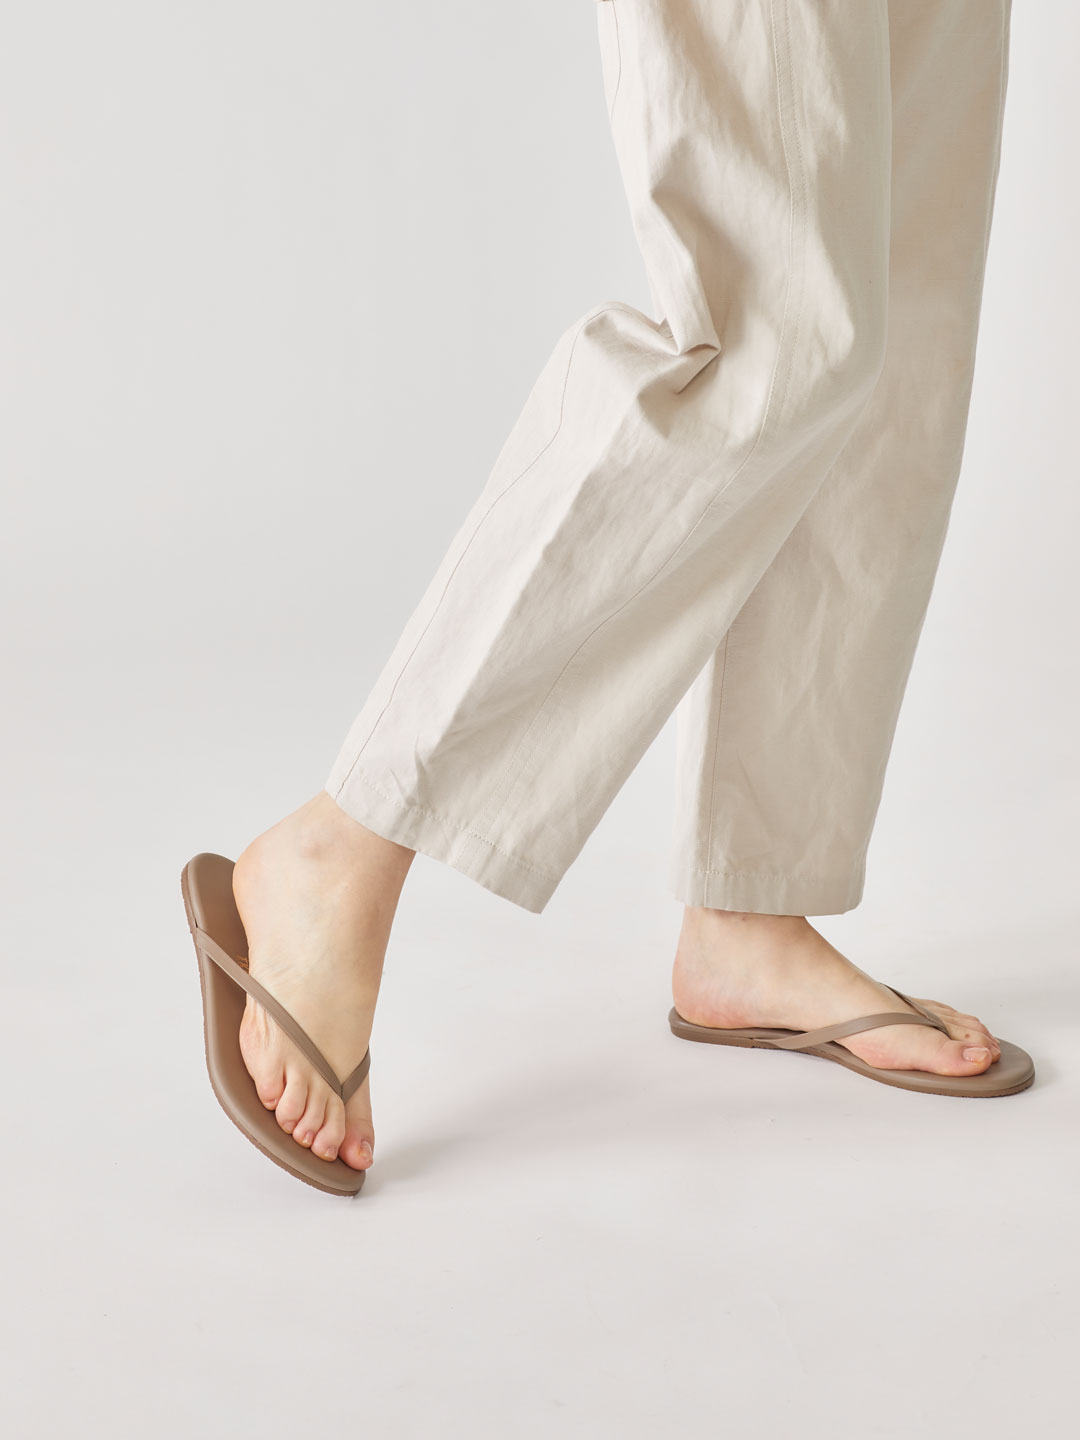 Most Loved Signature Flip Flop Sandals - Biscuit/Grey Beige